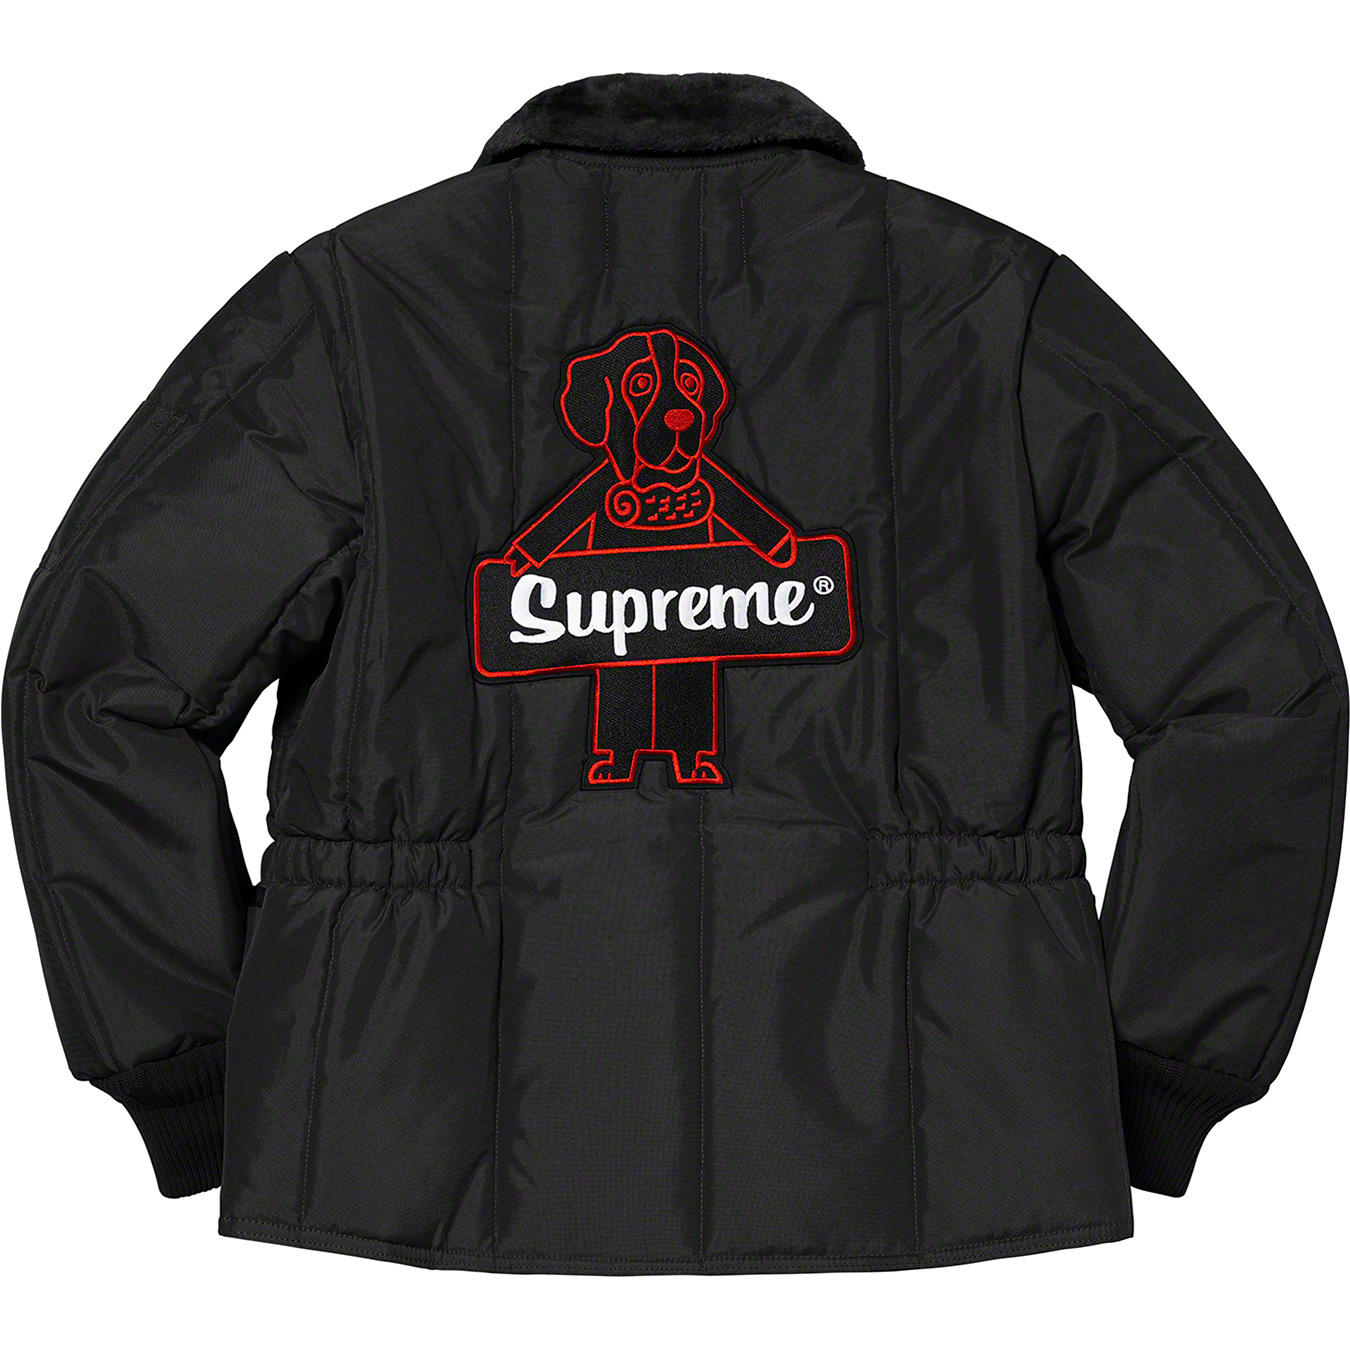 Supreme®/RefrigiWear® Insulated Iron-Tuff Jacket - Supreme Community